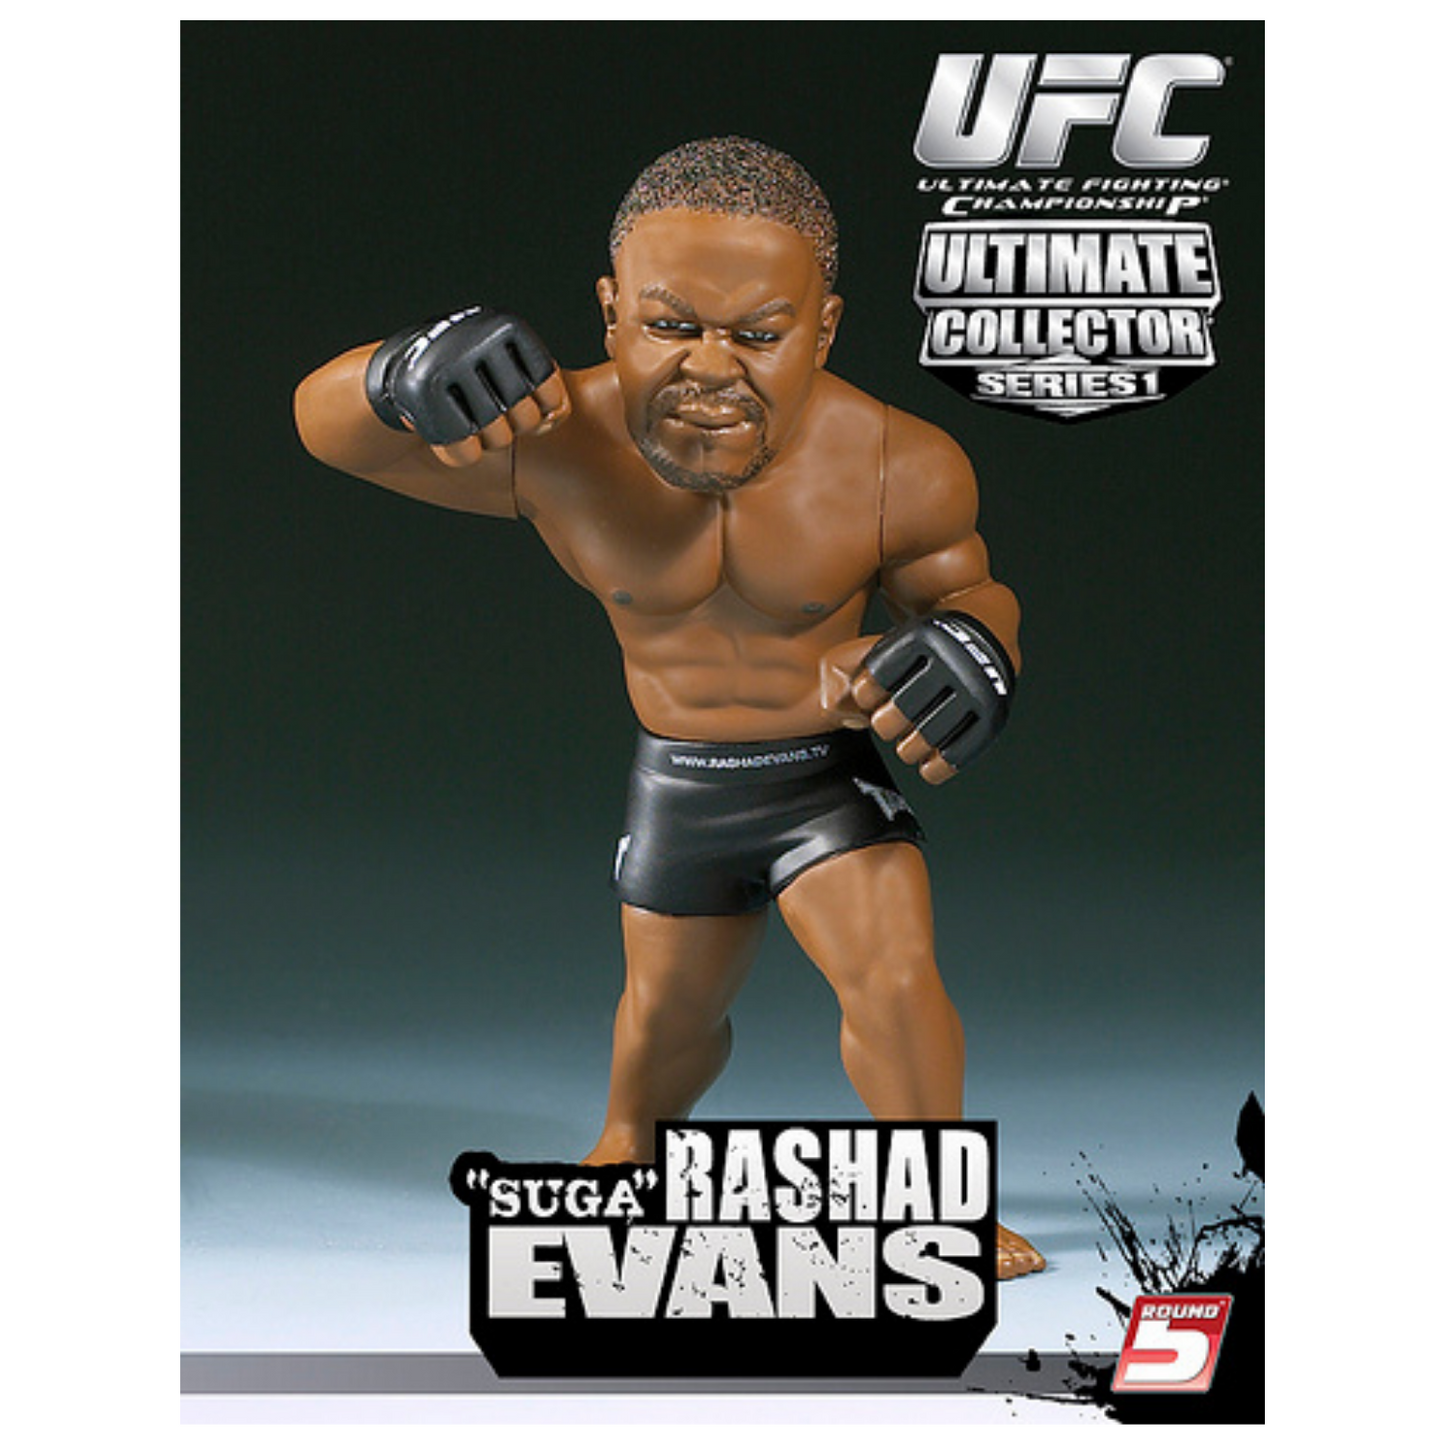 Round 5 UFC “Suga” Rashad Evans Ultimate Collector Series 1 Action Figure